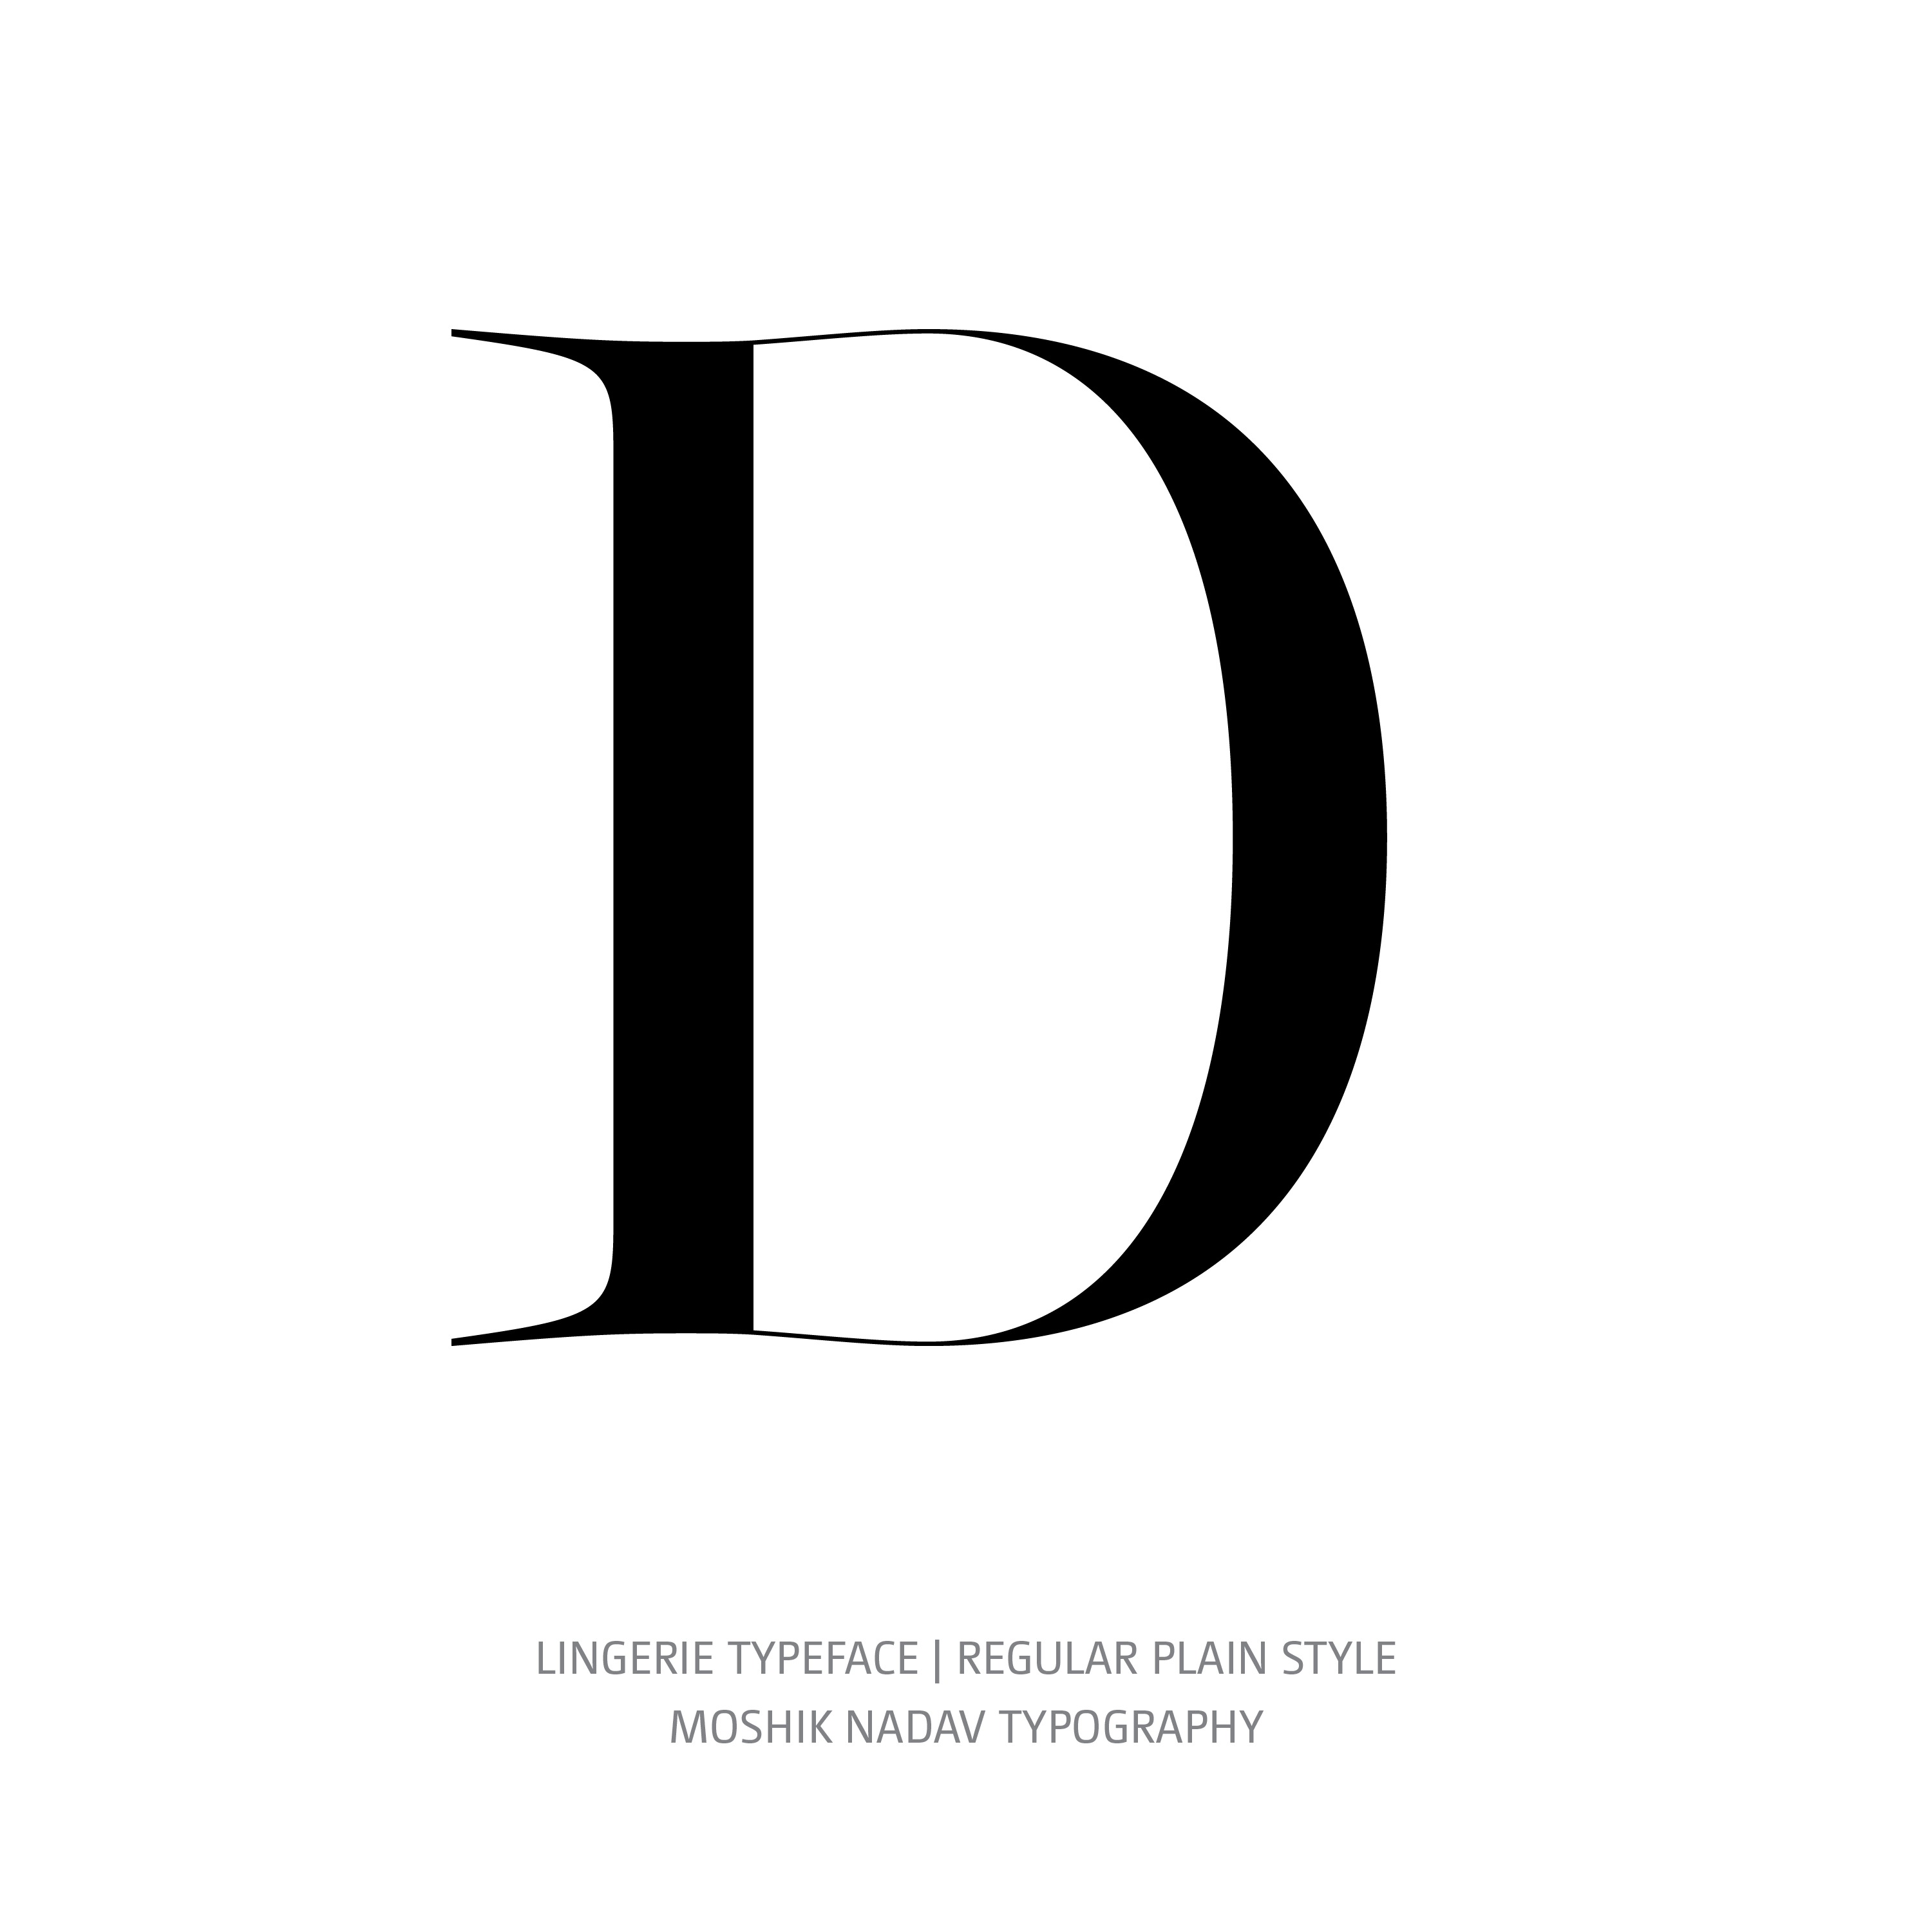 Lingerie Typeface Regular Plain D